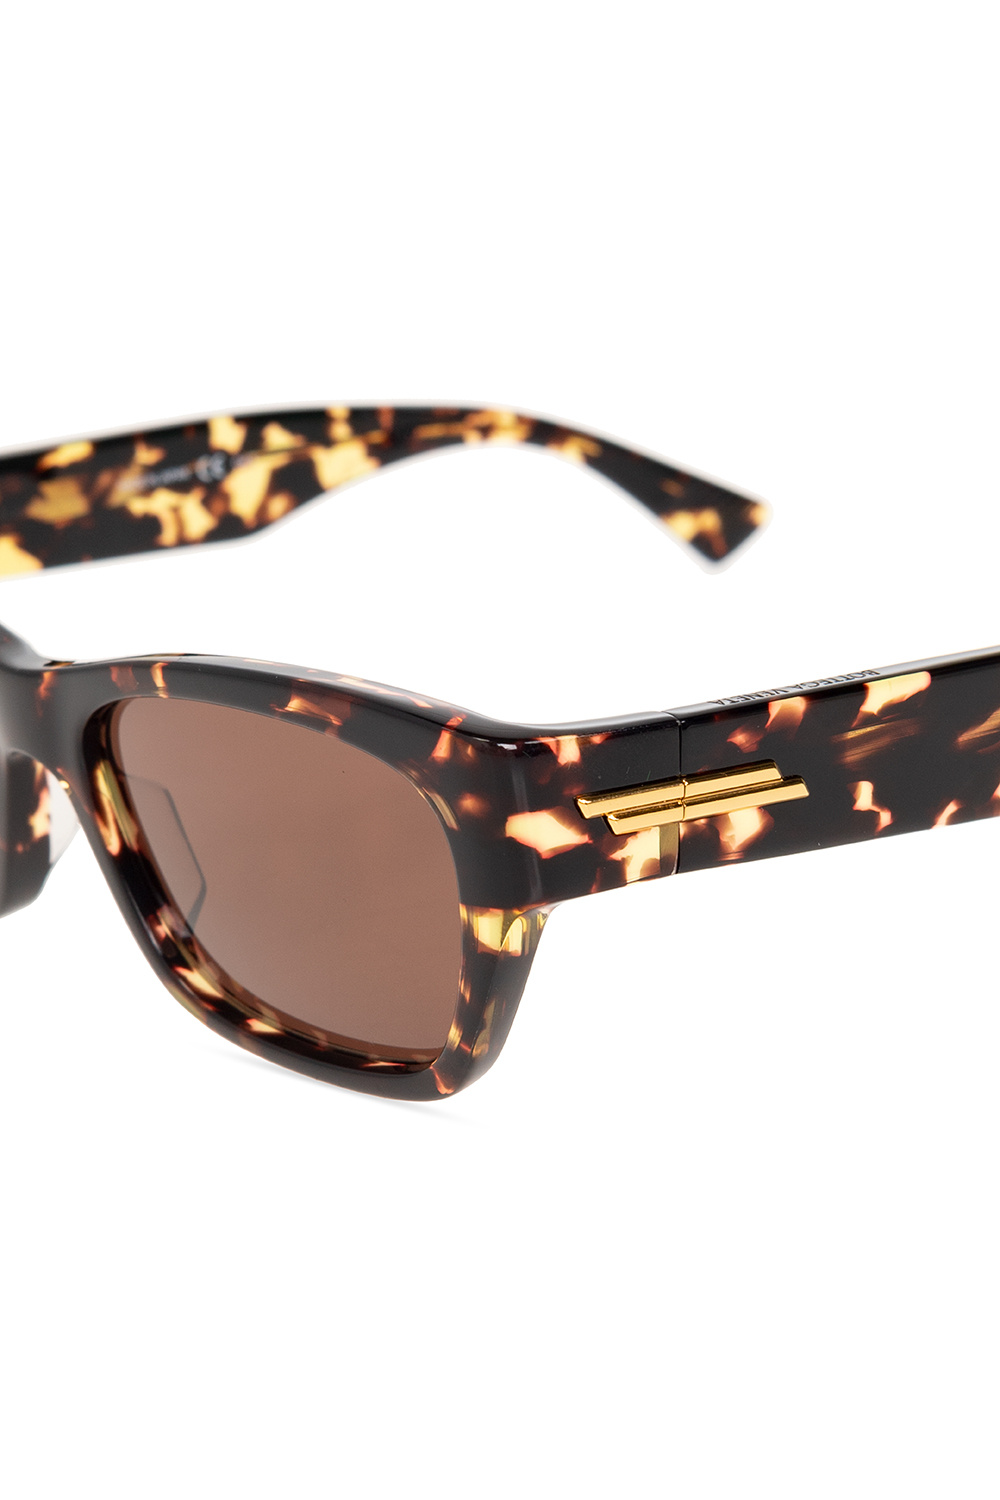 Bottega Veneta off designer brand Dior sunglasses